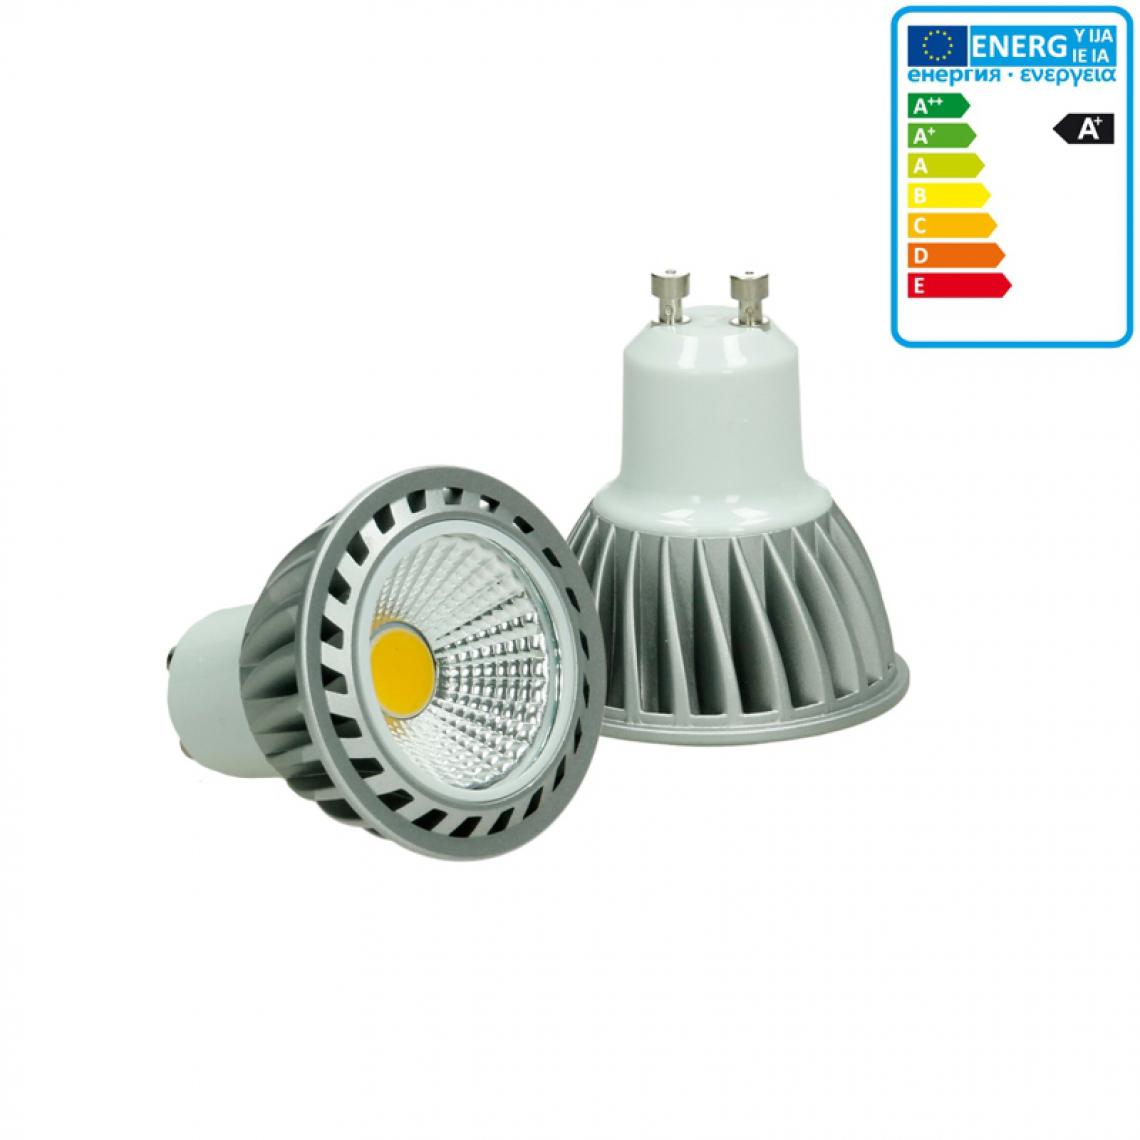 Ecd Germany - ECD Germany LED COB GU10 Ampoule Lampe Spot Dimmable 4W Blanc Neutre - Ampoules LED